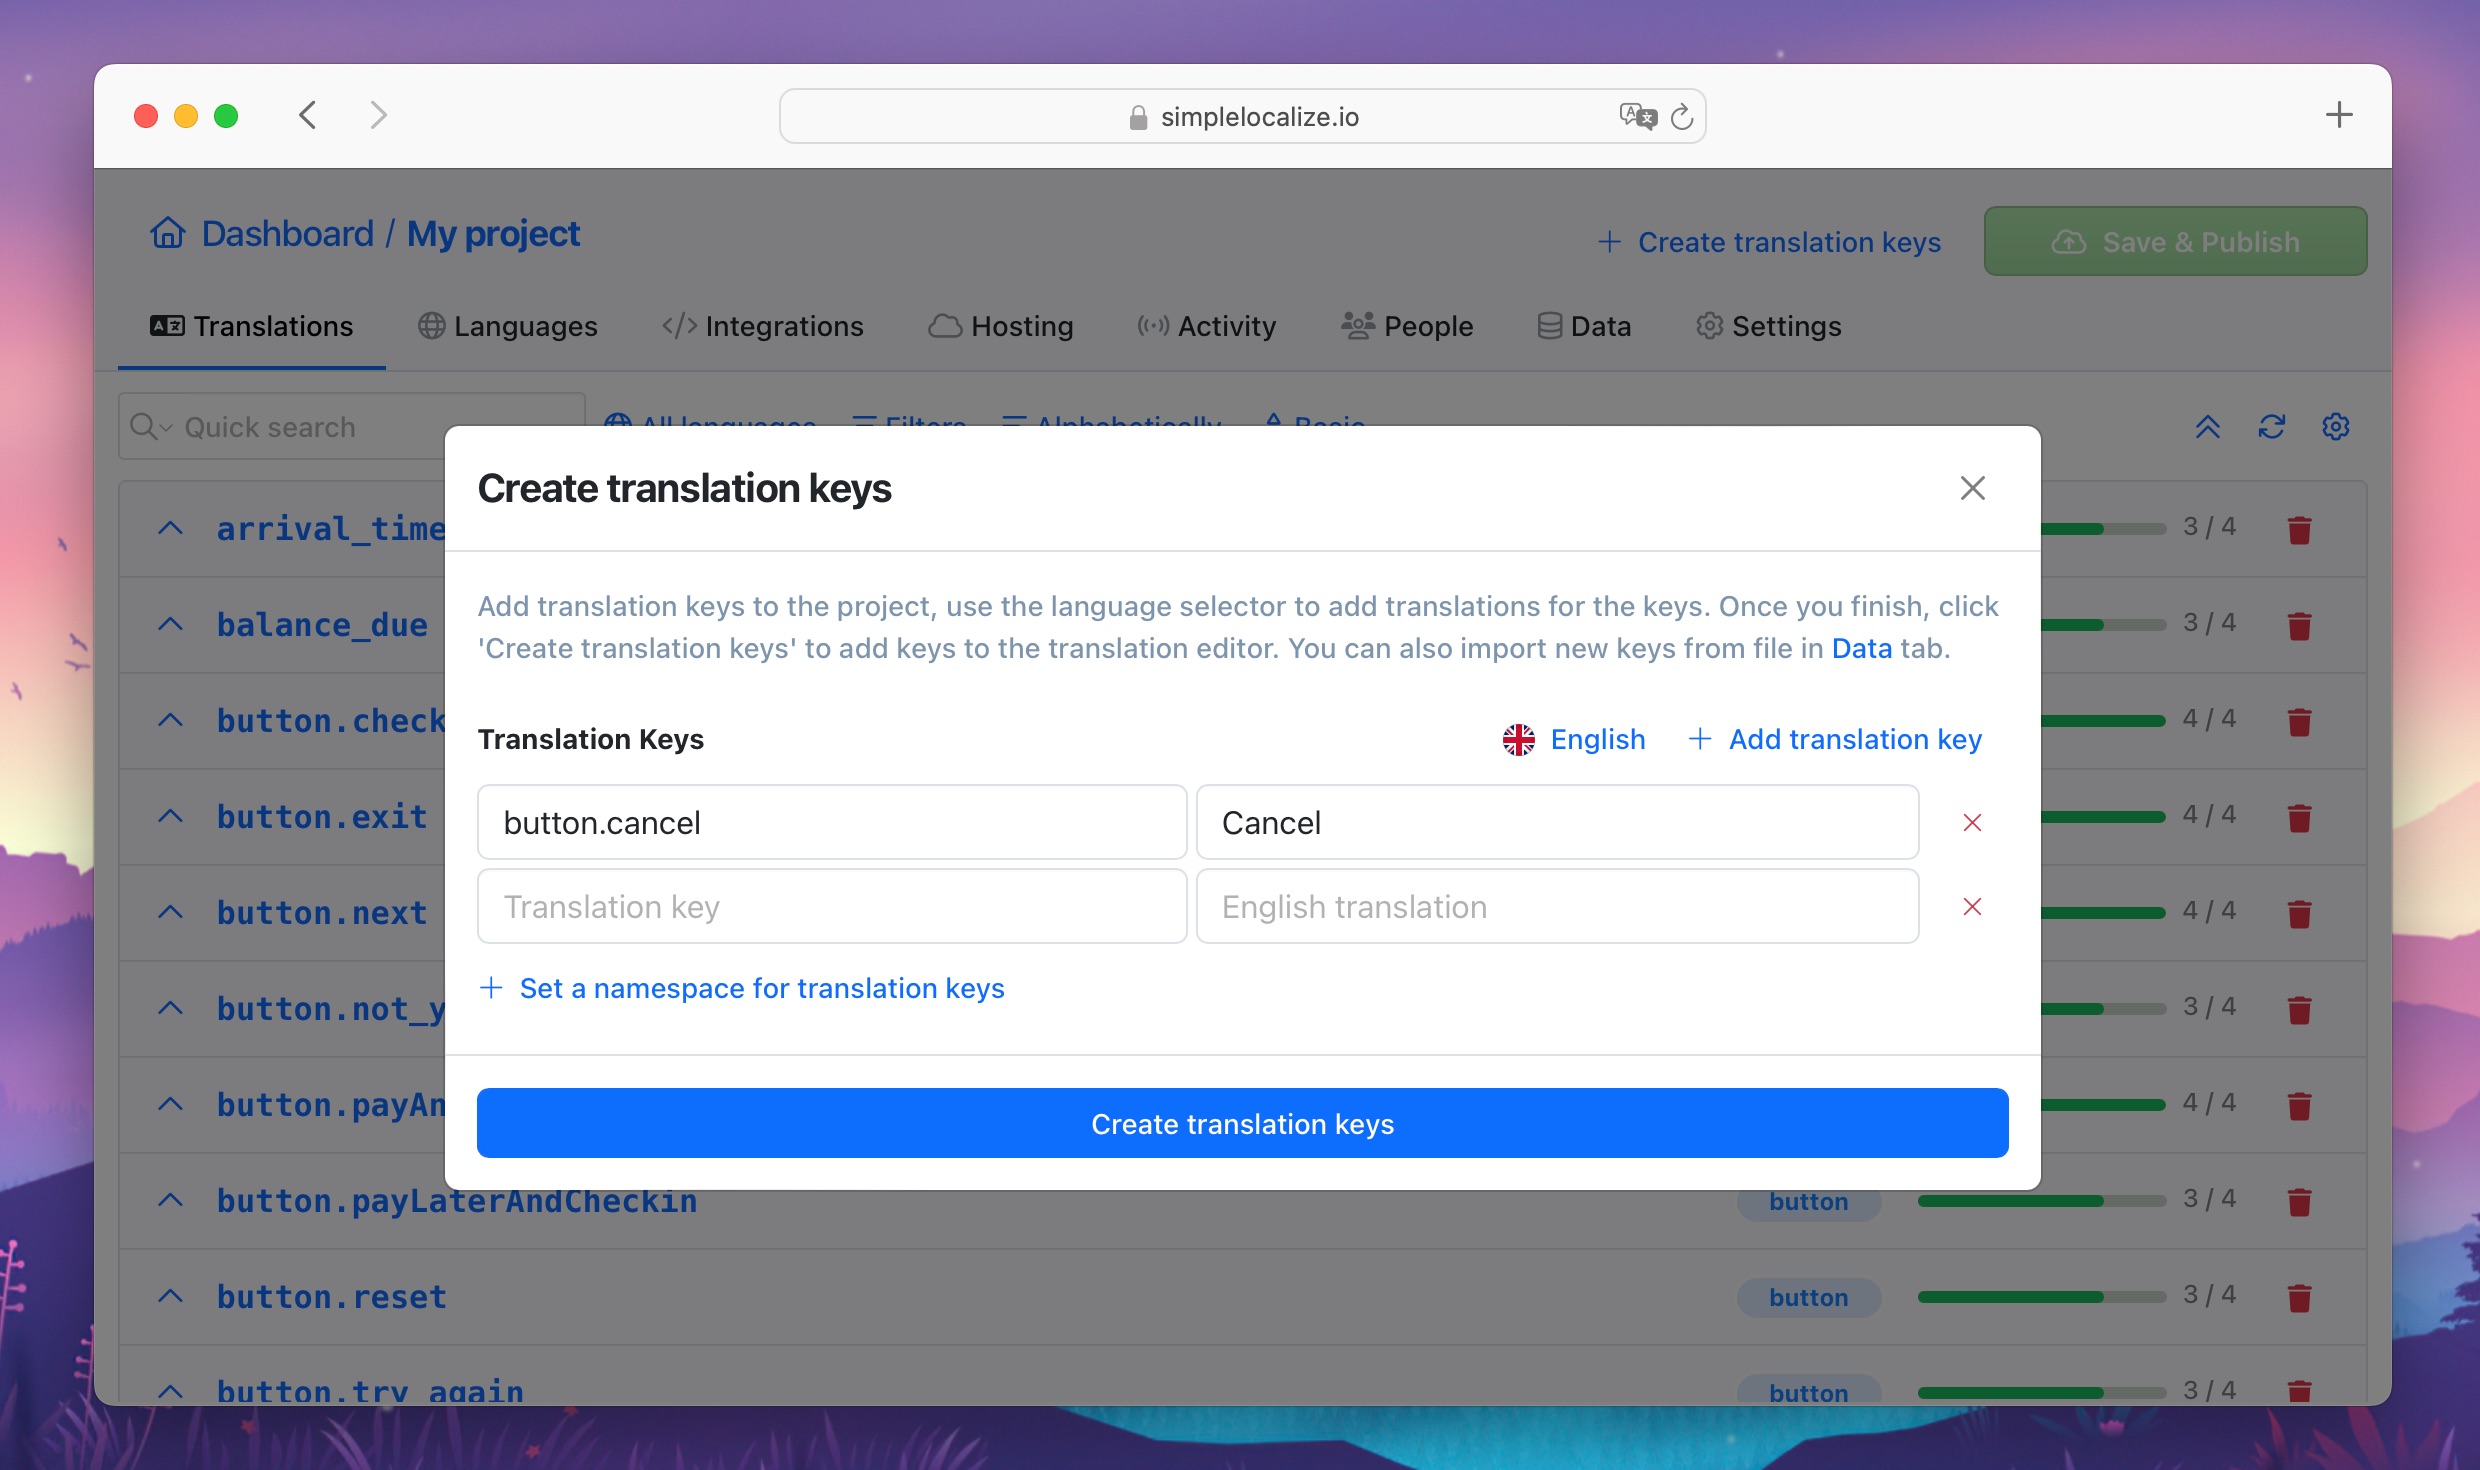 Creating translation keys